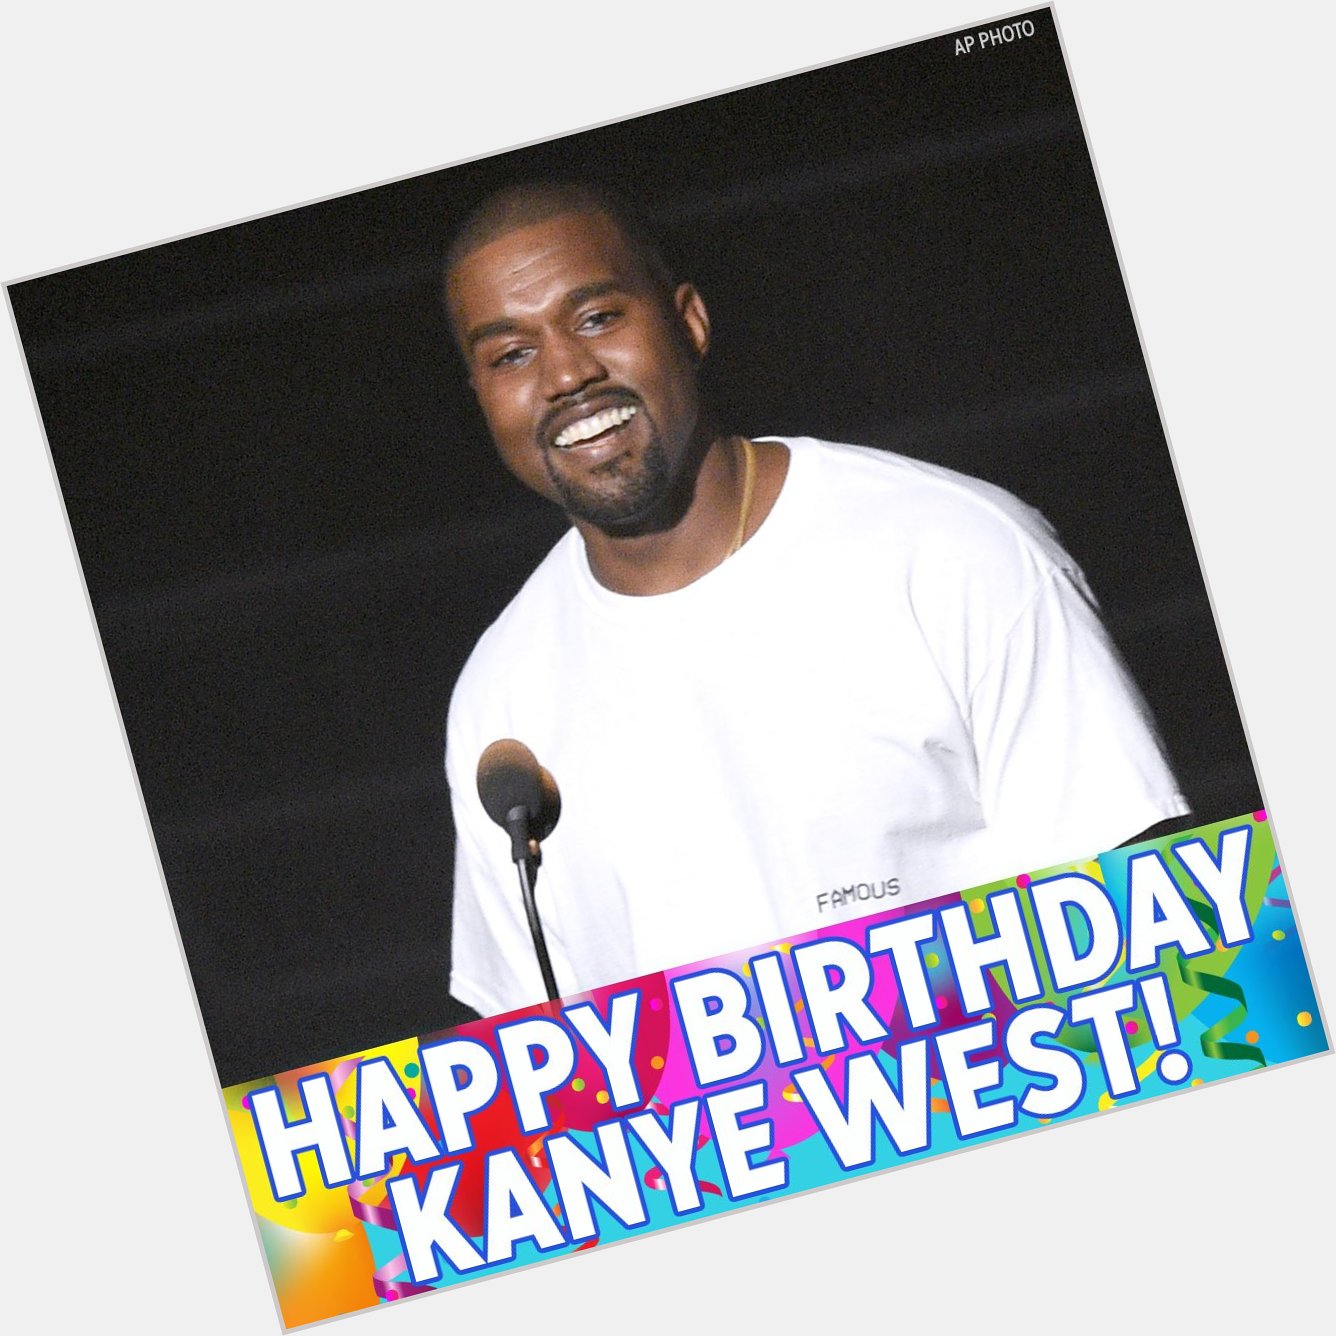 Happy Birthday, Yeezy ! Wishing Kanye West a great day. 